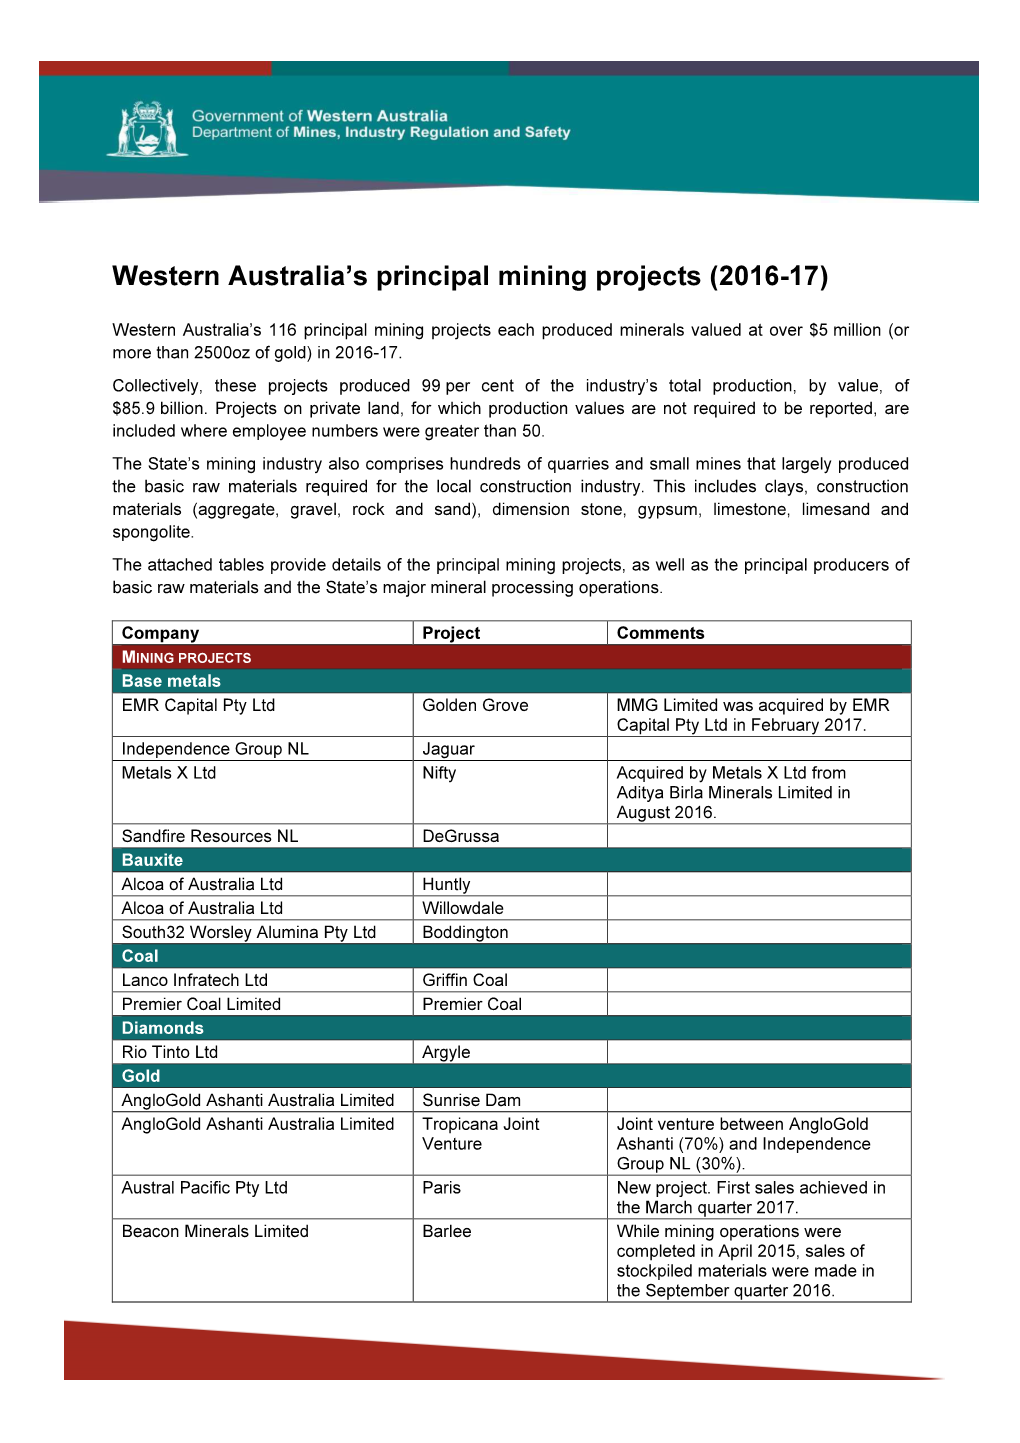 Western Australia's Principal Mining Projects (2016-17)